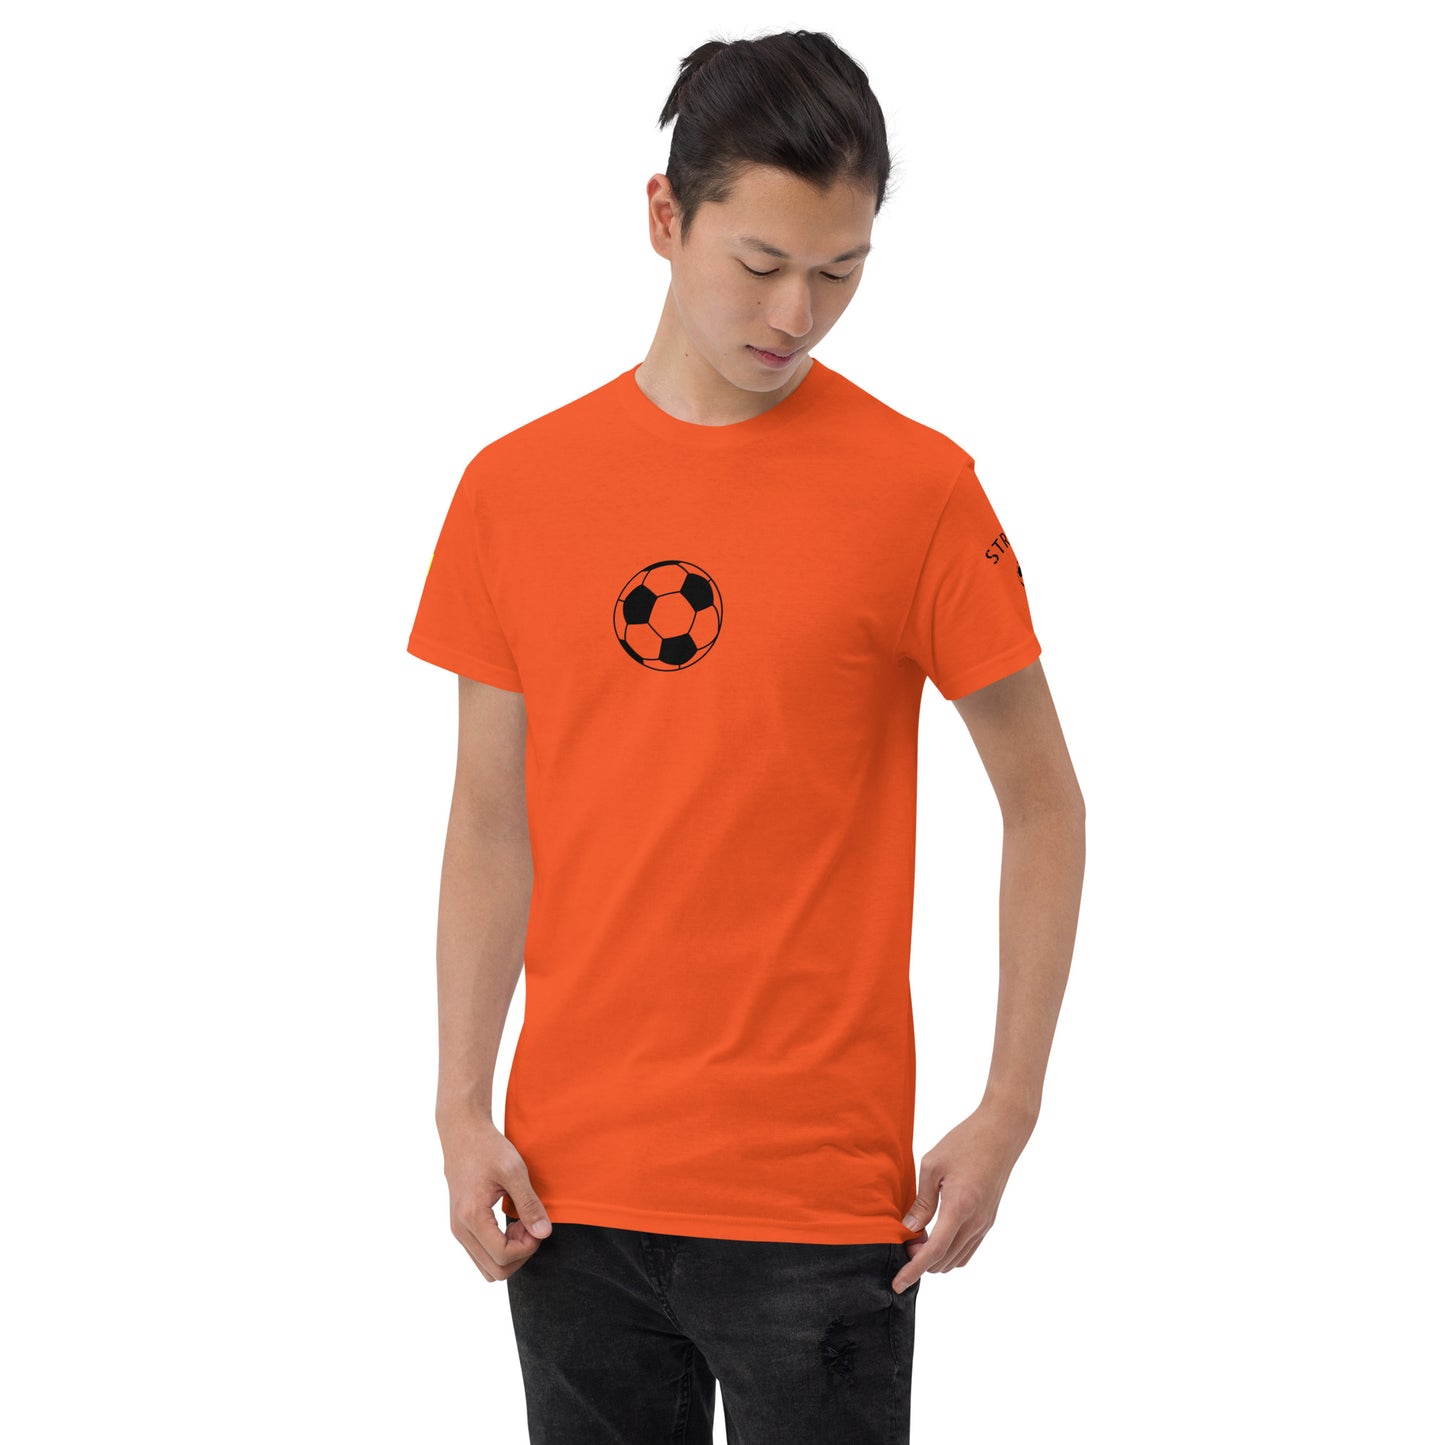 Striker 954 Soccer T-Shirt